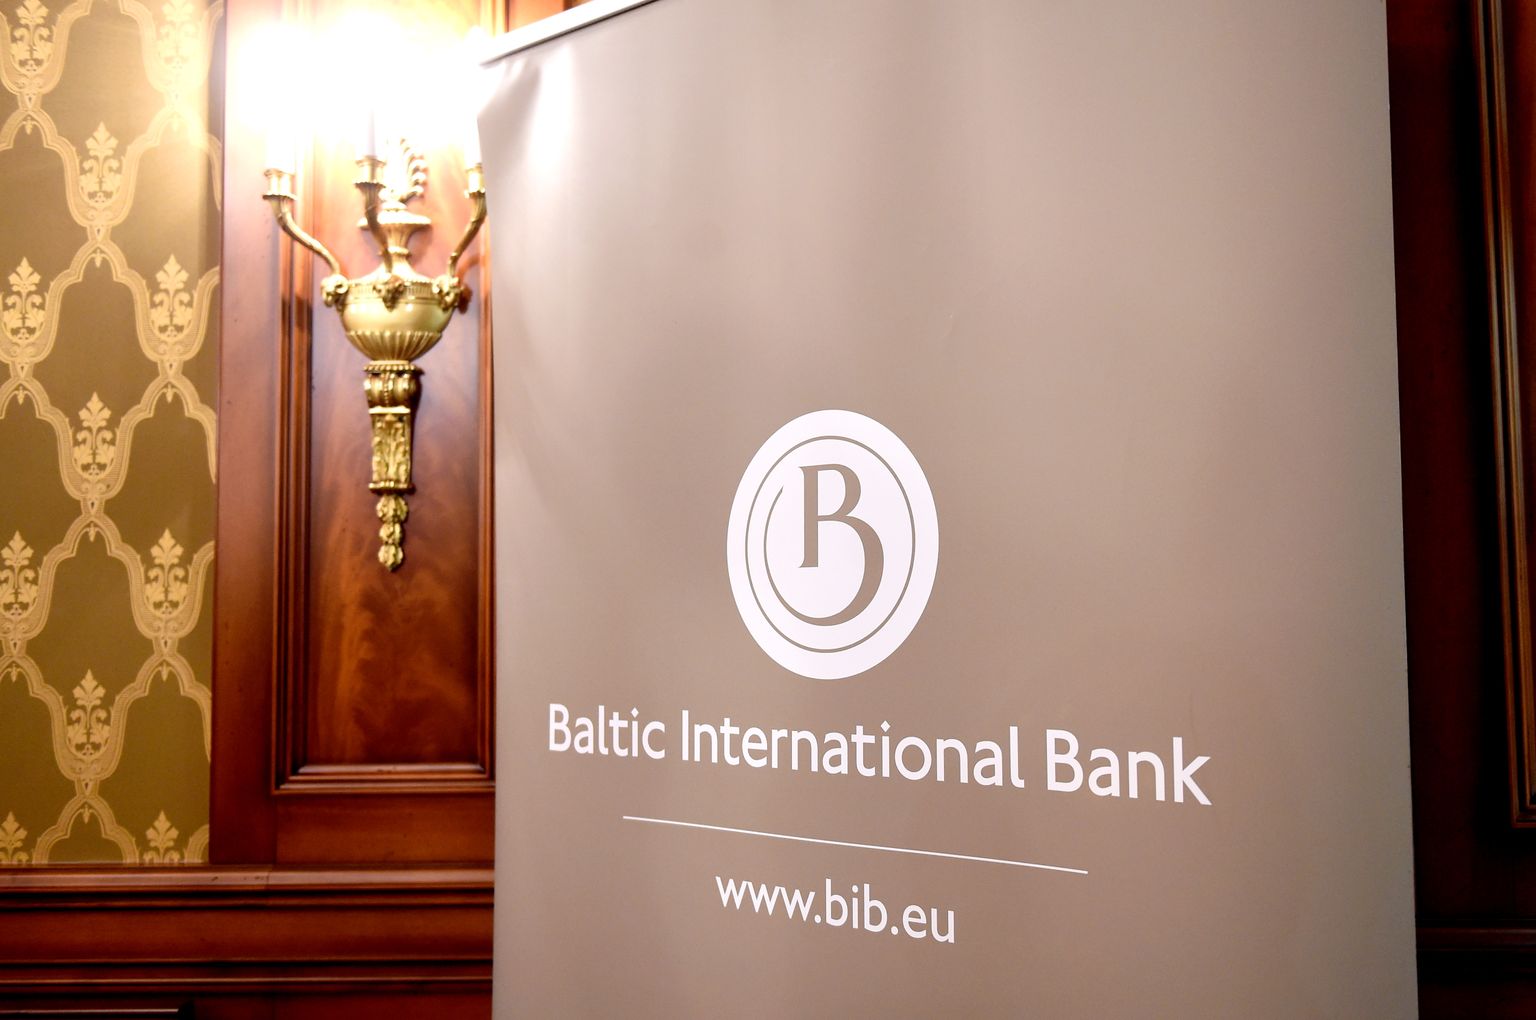 Baltic International Banki logo.